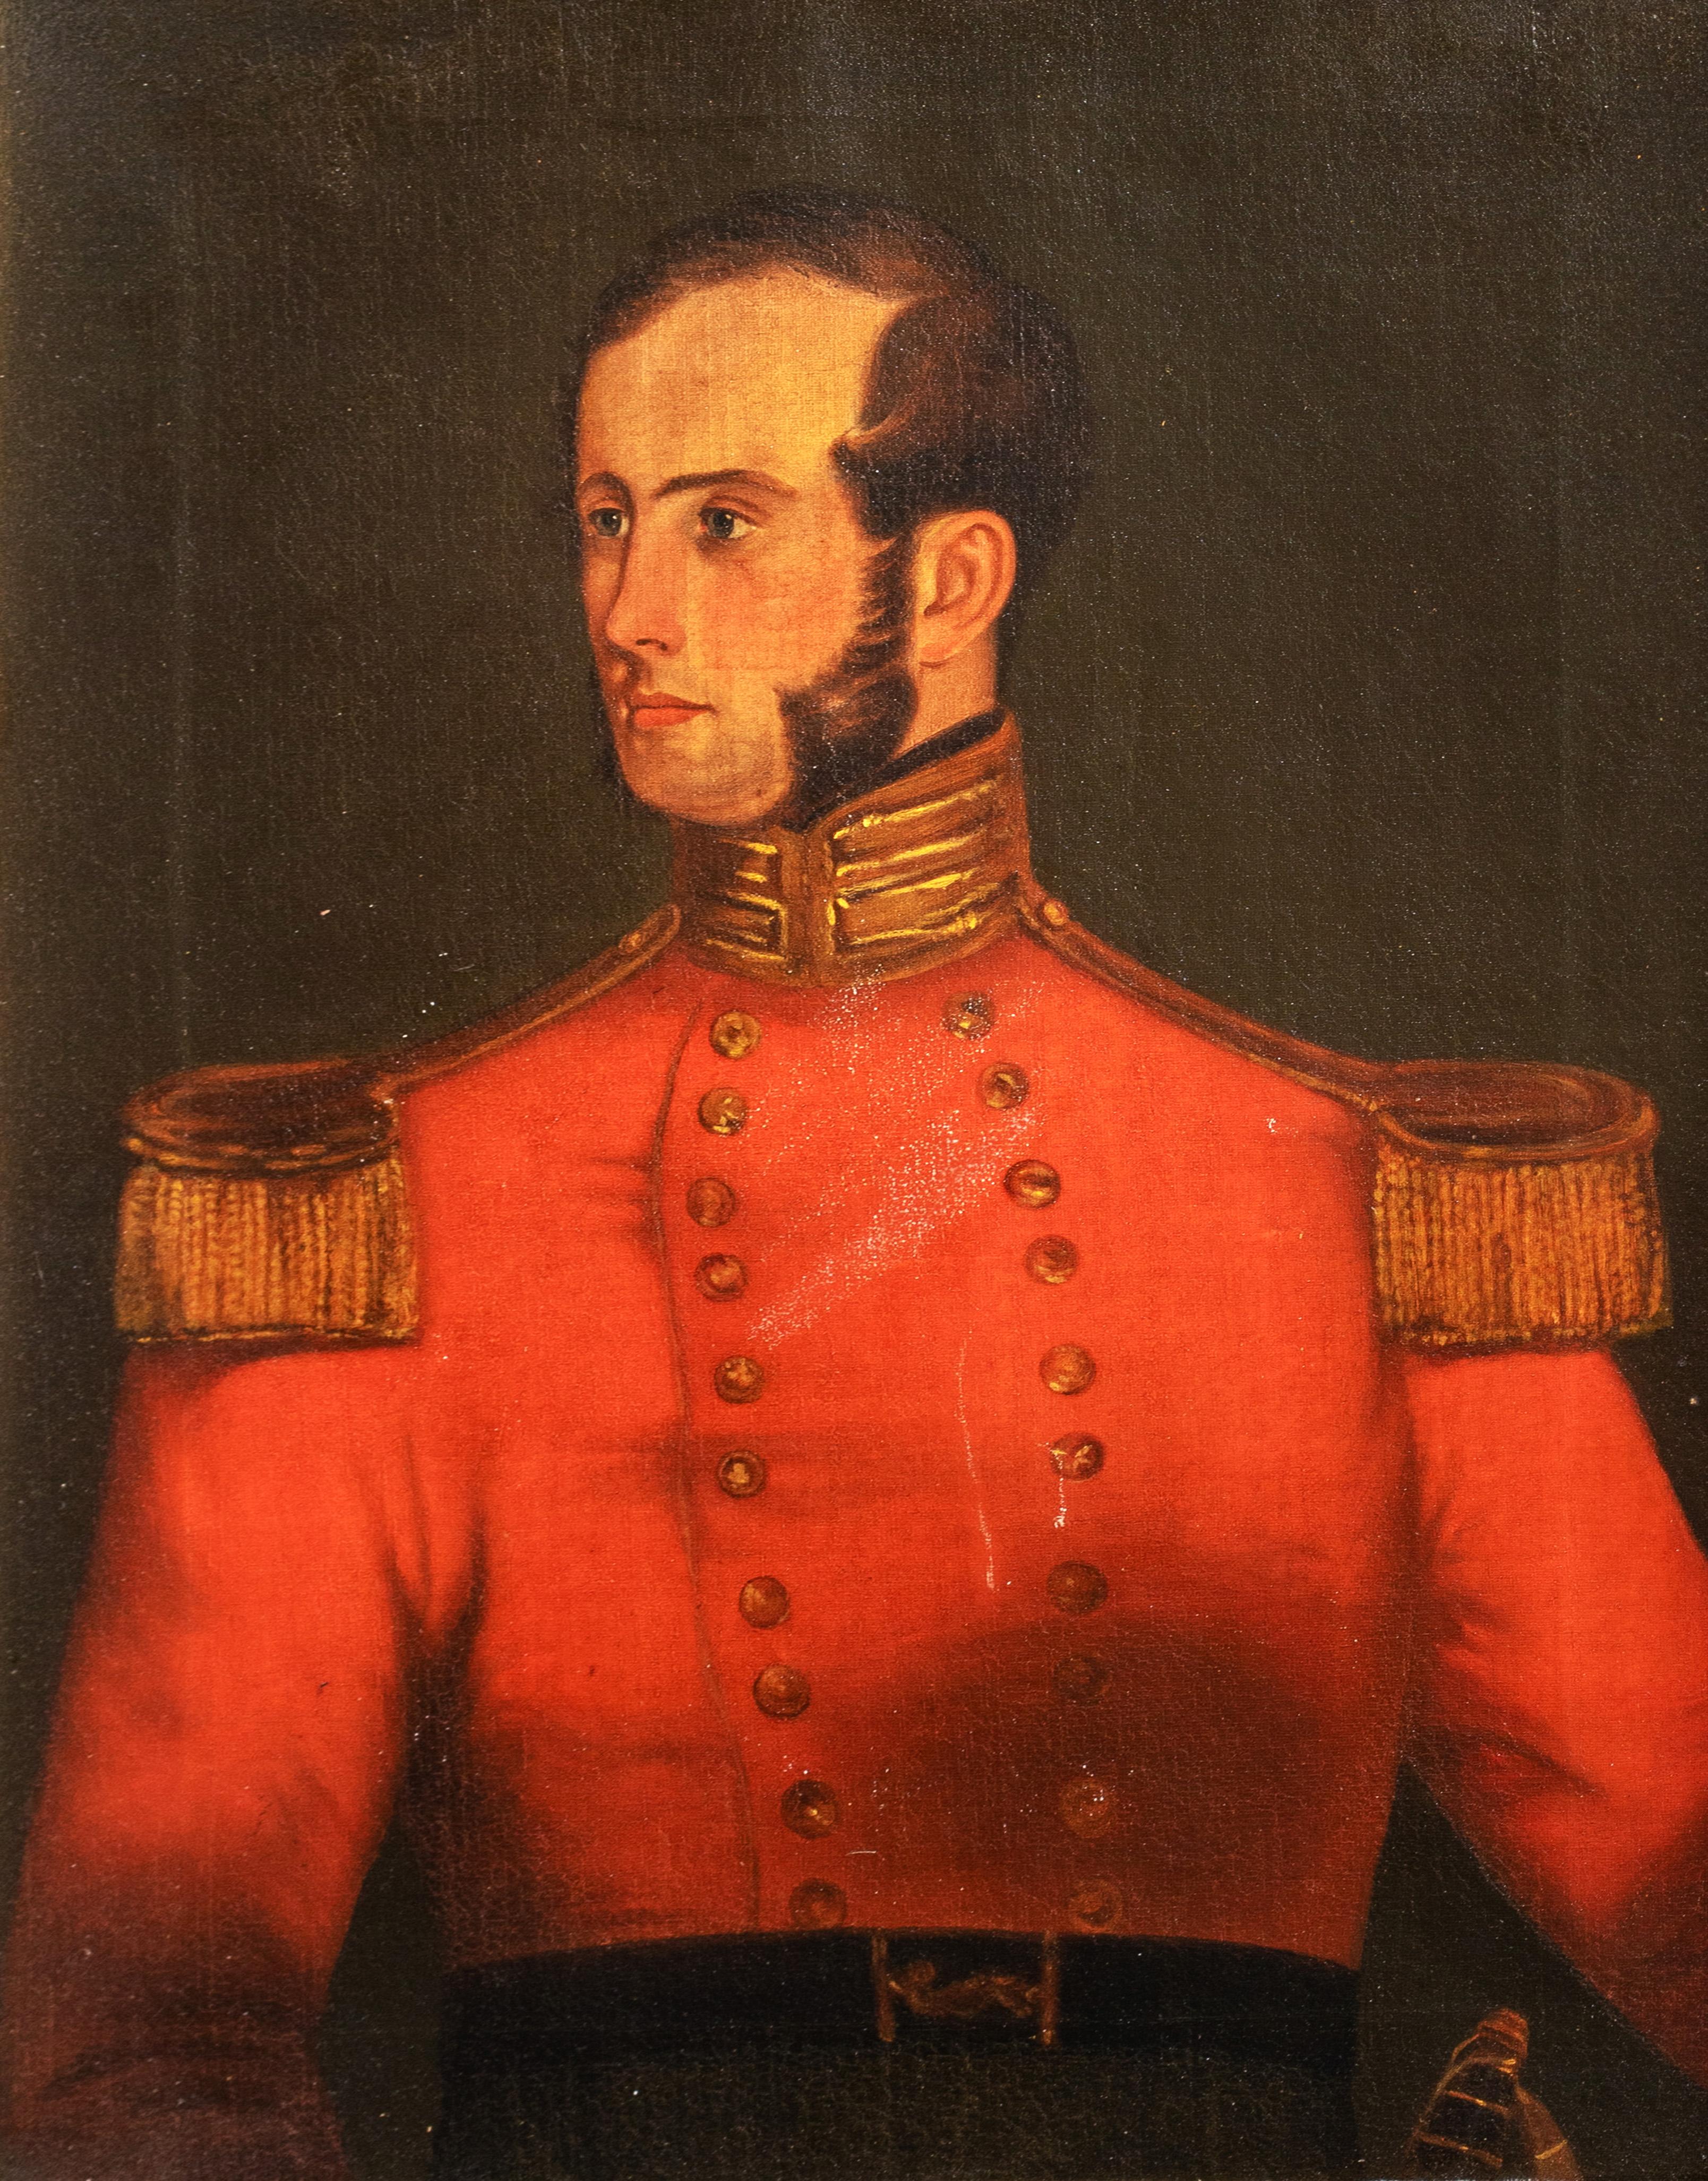 napoleonic british officer